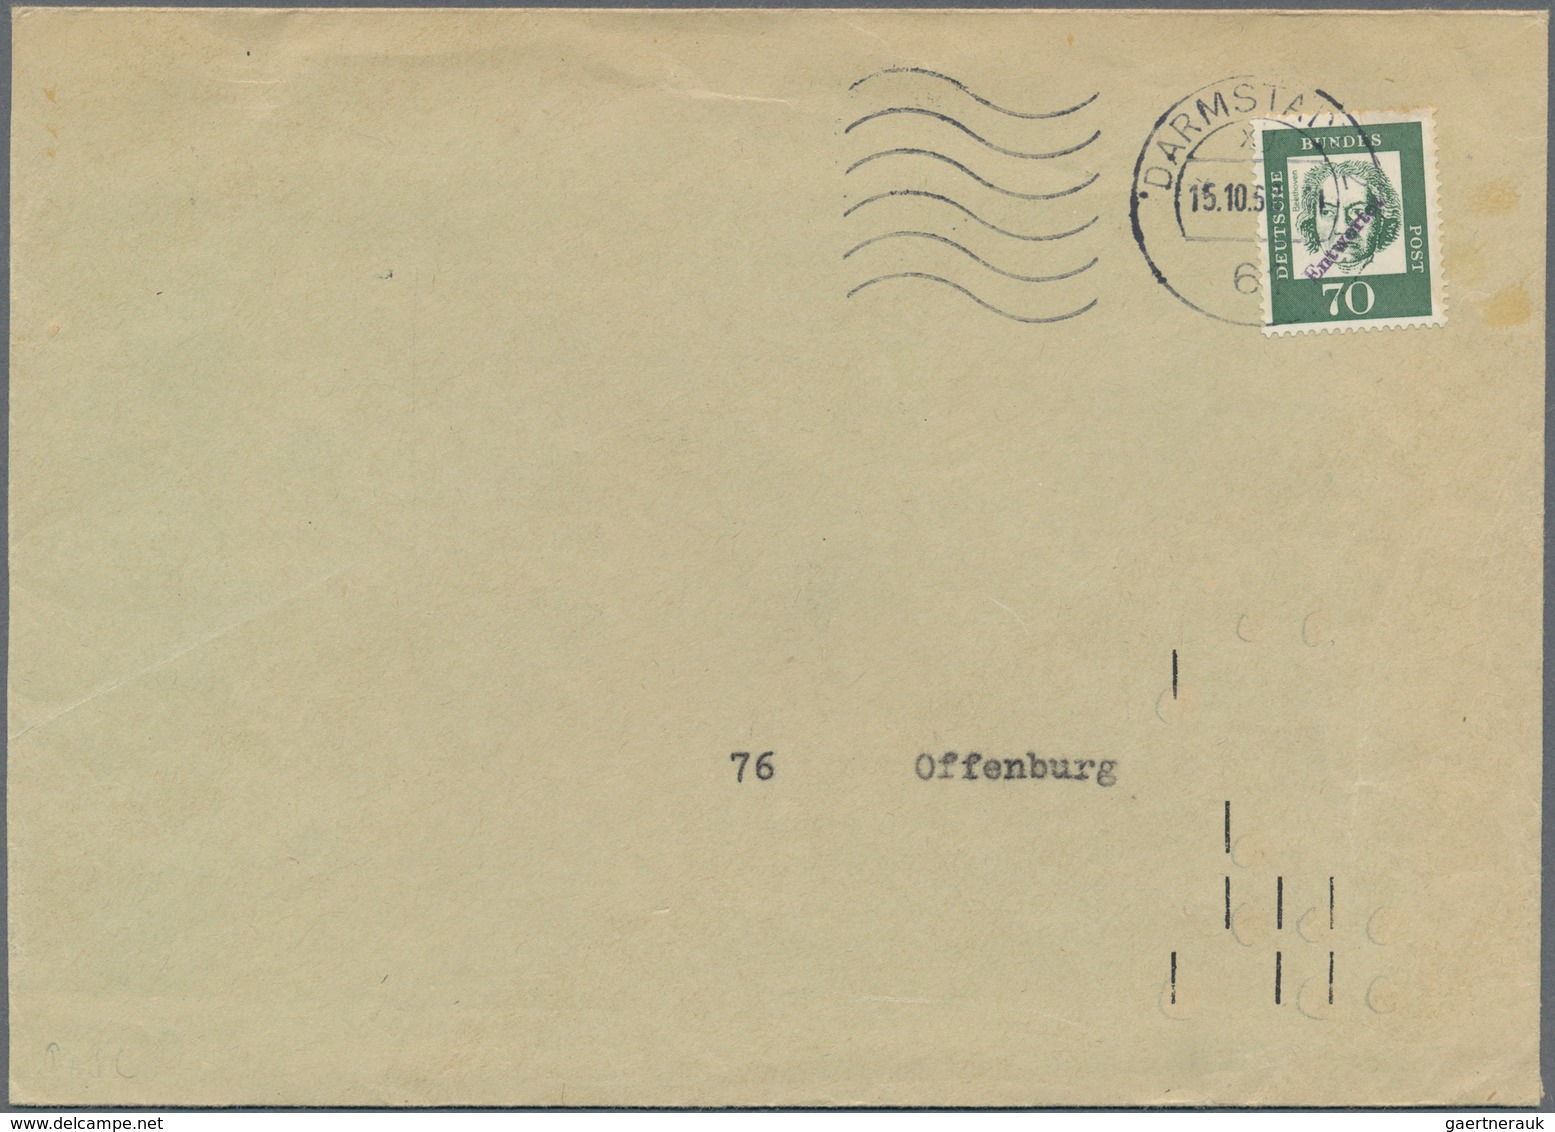 Thematik: Postautomation / Postal Mecanization: 1960/1975 (ca.), Interessante Sammlung Mit Schwerpun - Correo Postal